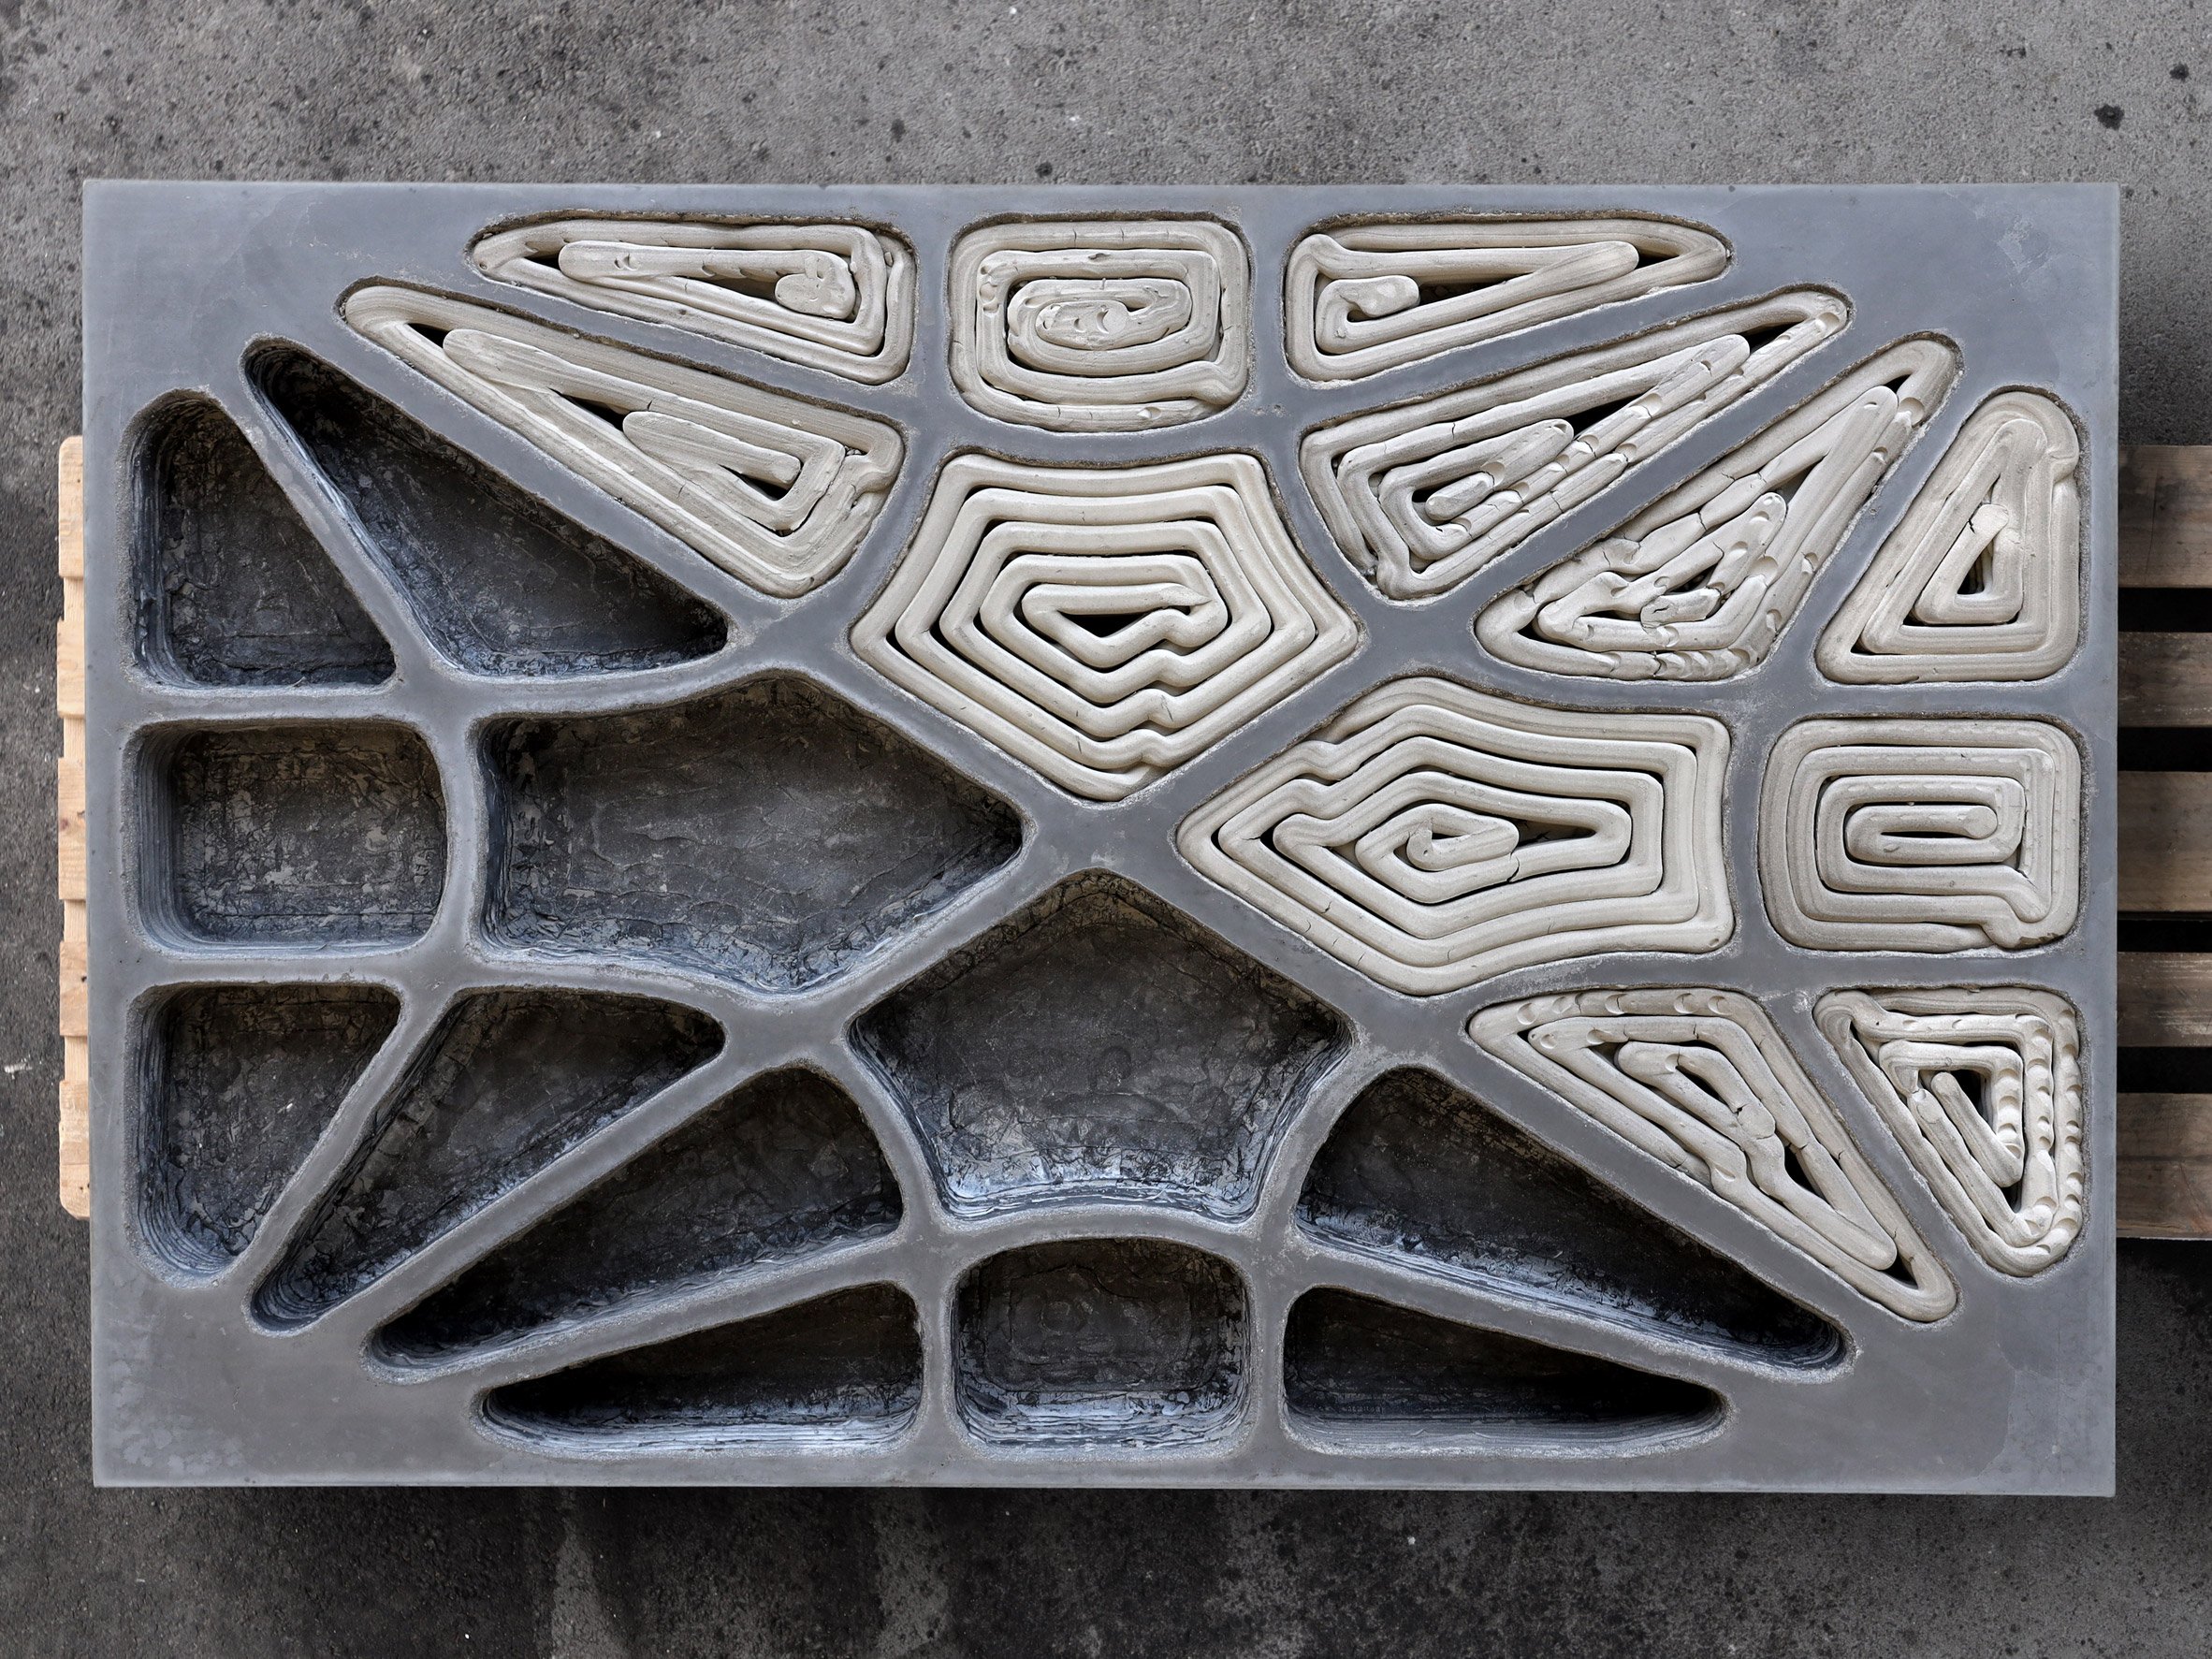 FoamWork formwork for concrete slabs by ETH Zurich